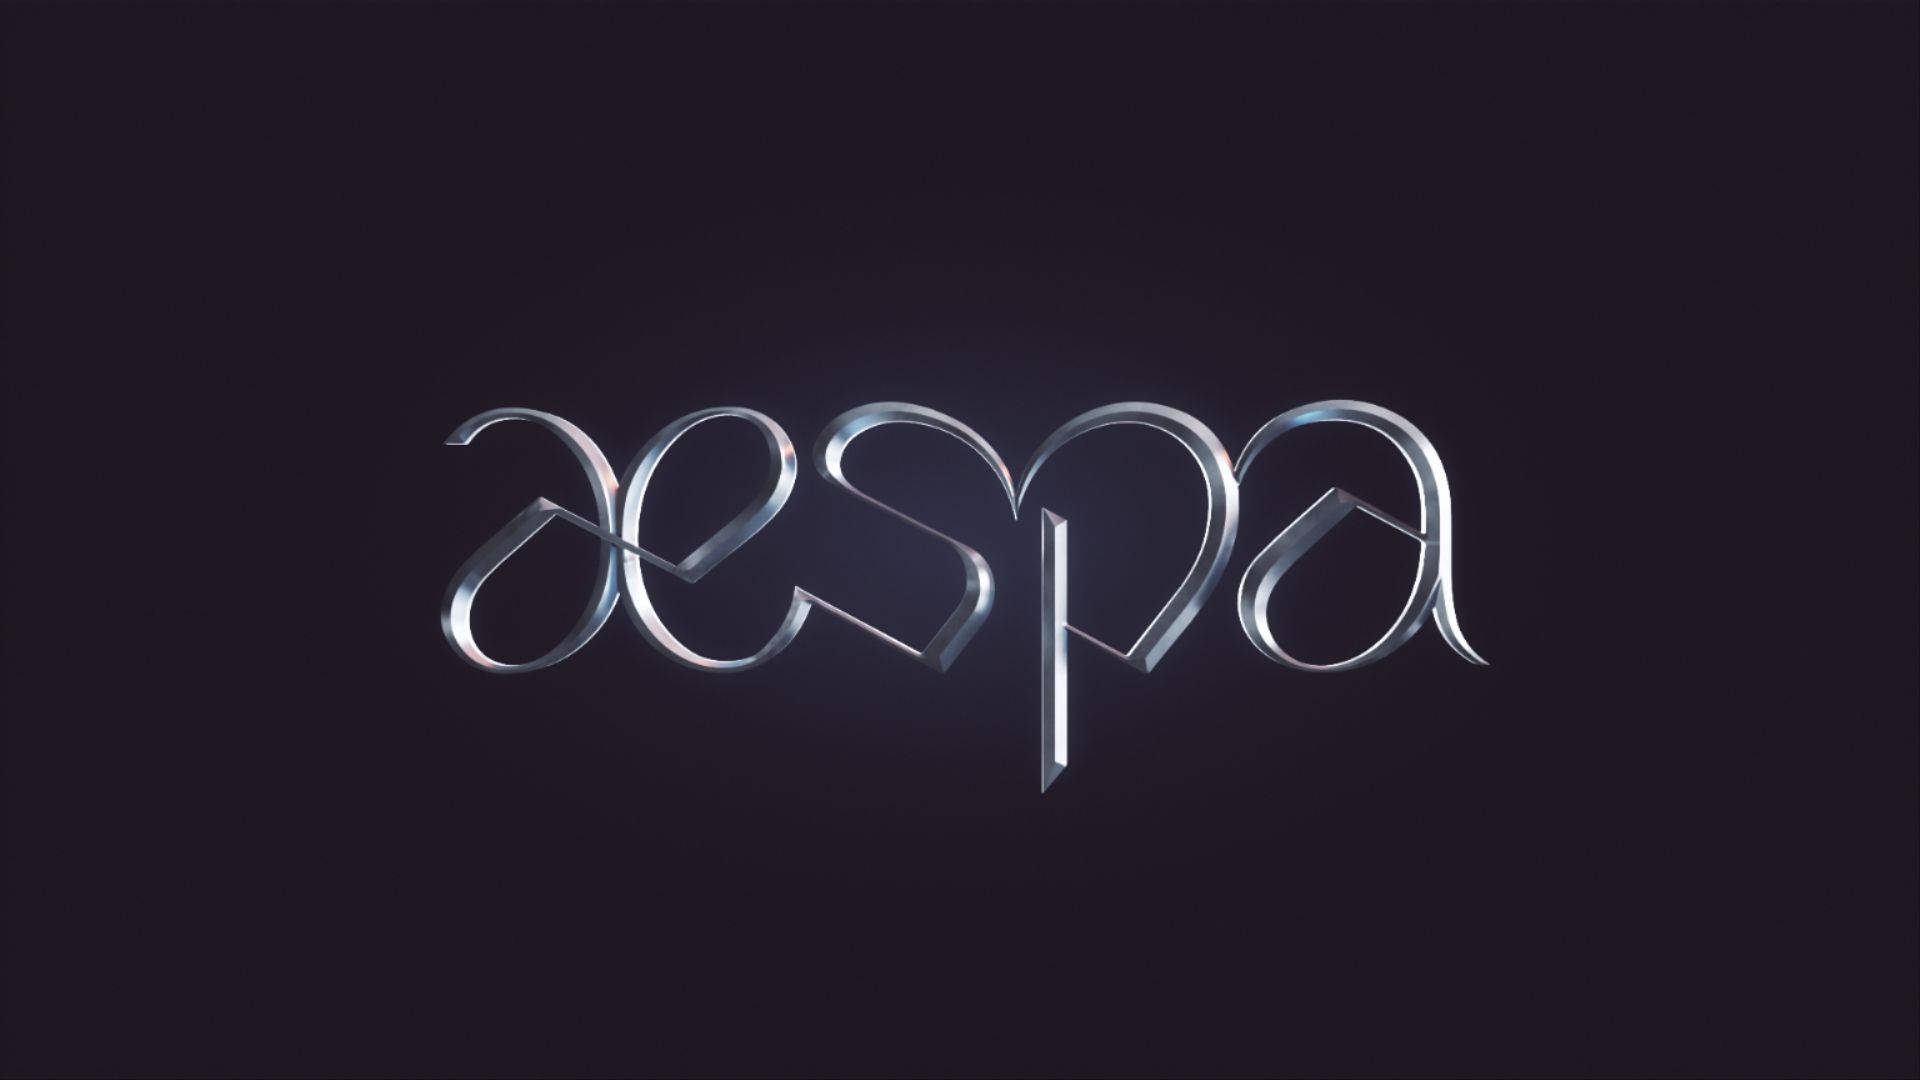 Download Aespa Crystal Logo Wallpaper